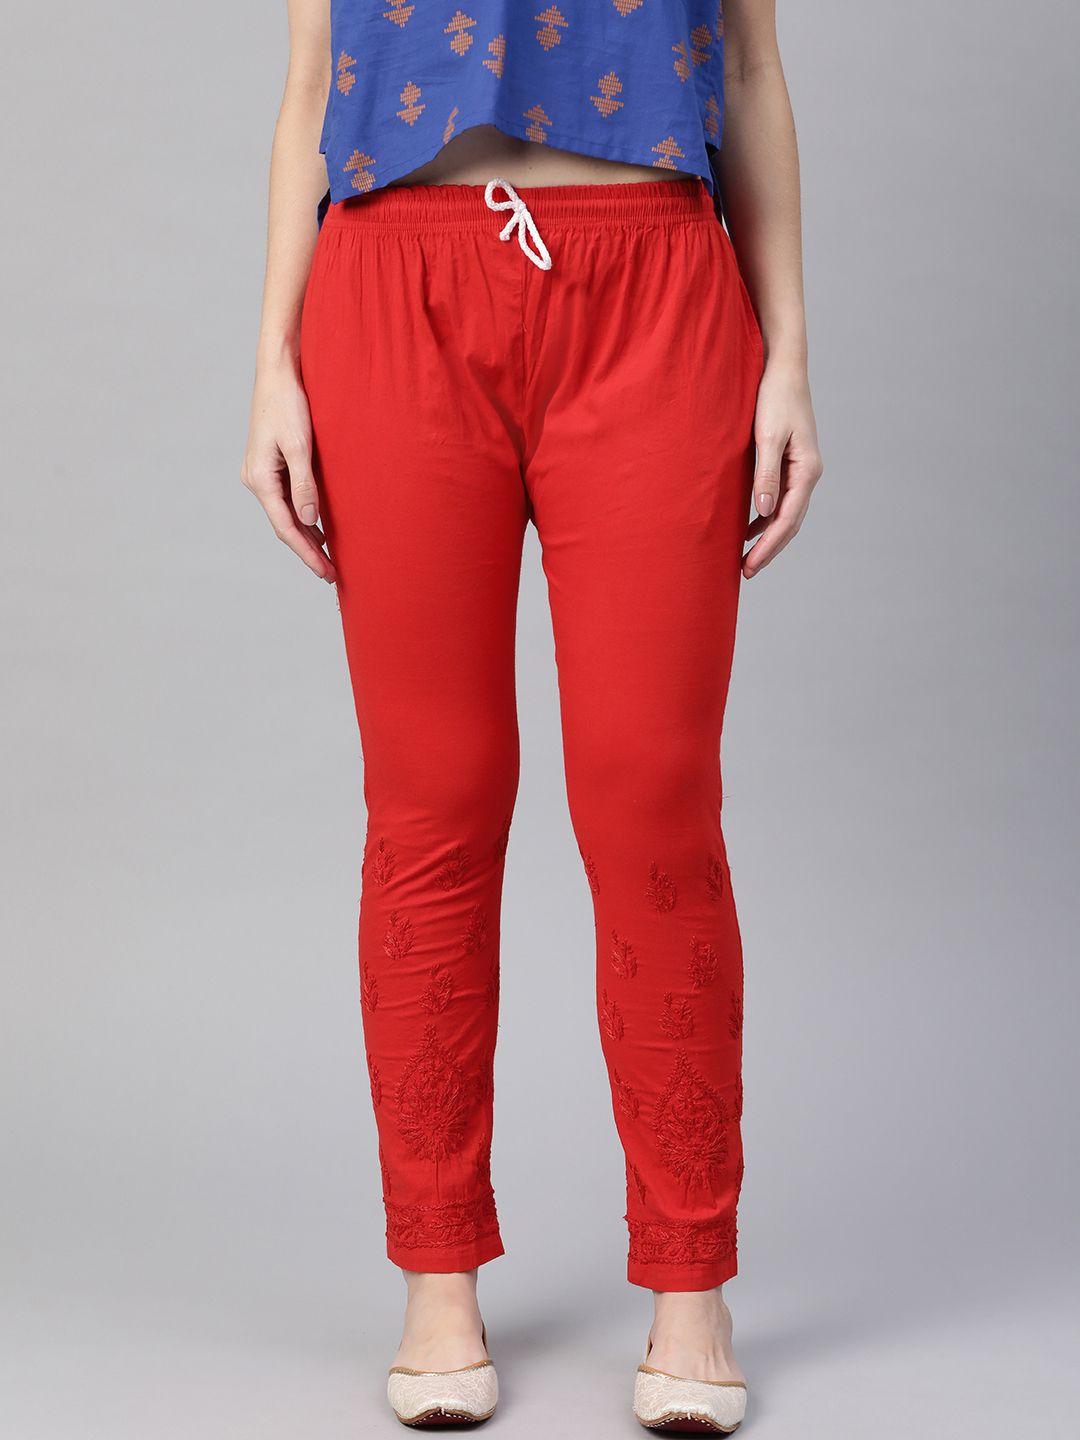 saadgi women red chikankari embroidered cotton handloom slim fit cigarette trousers